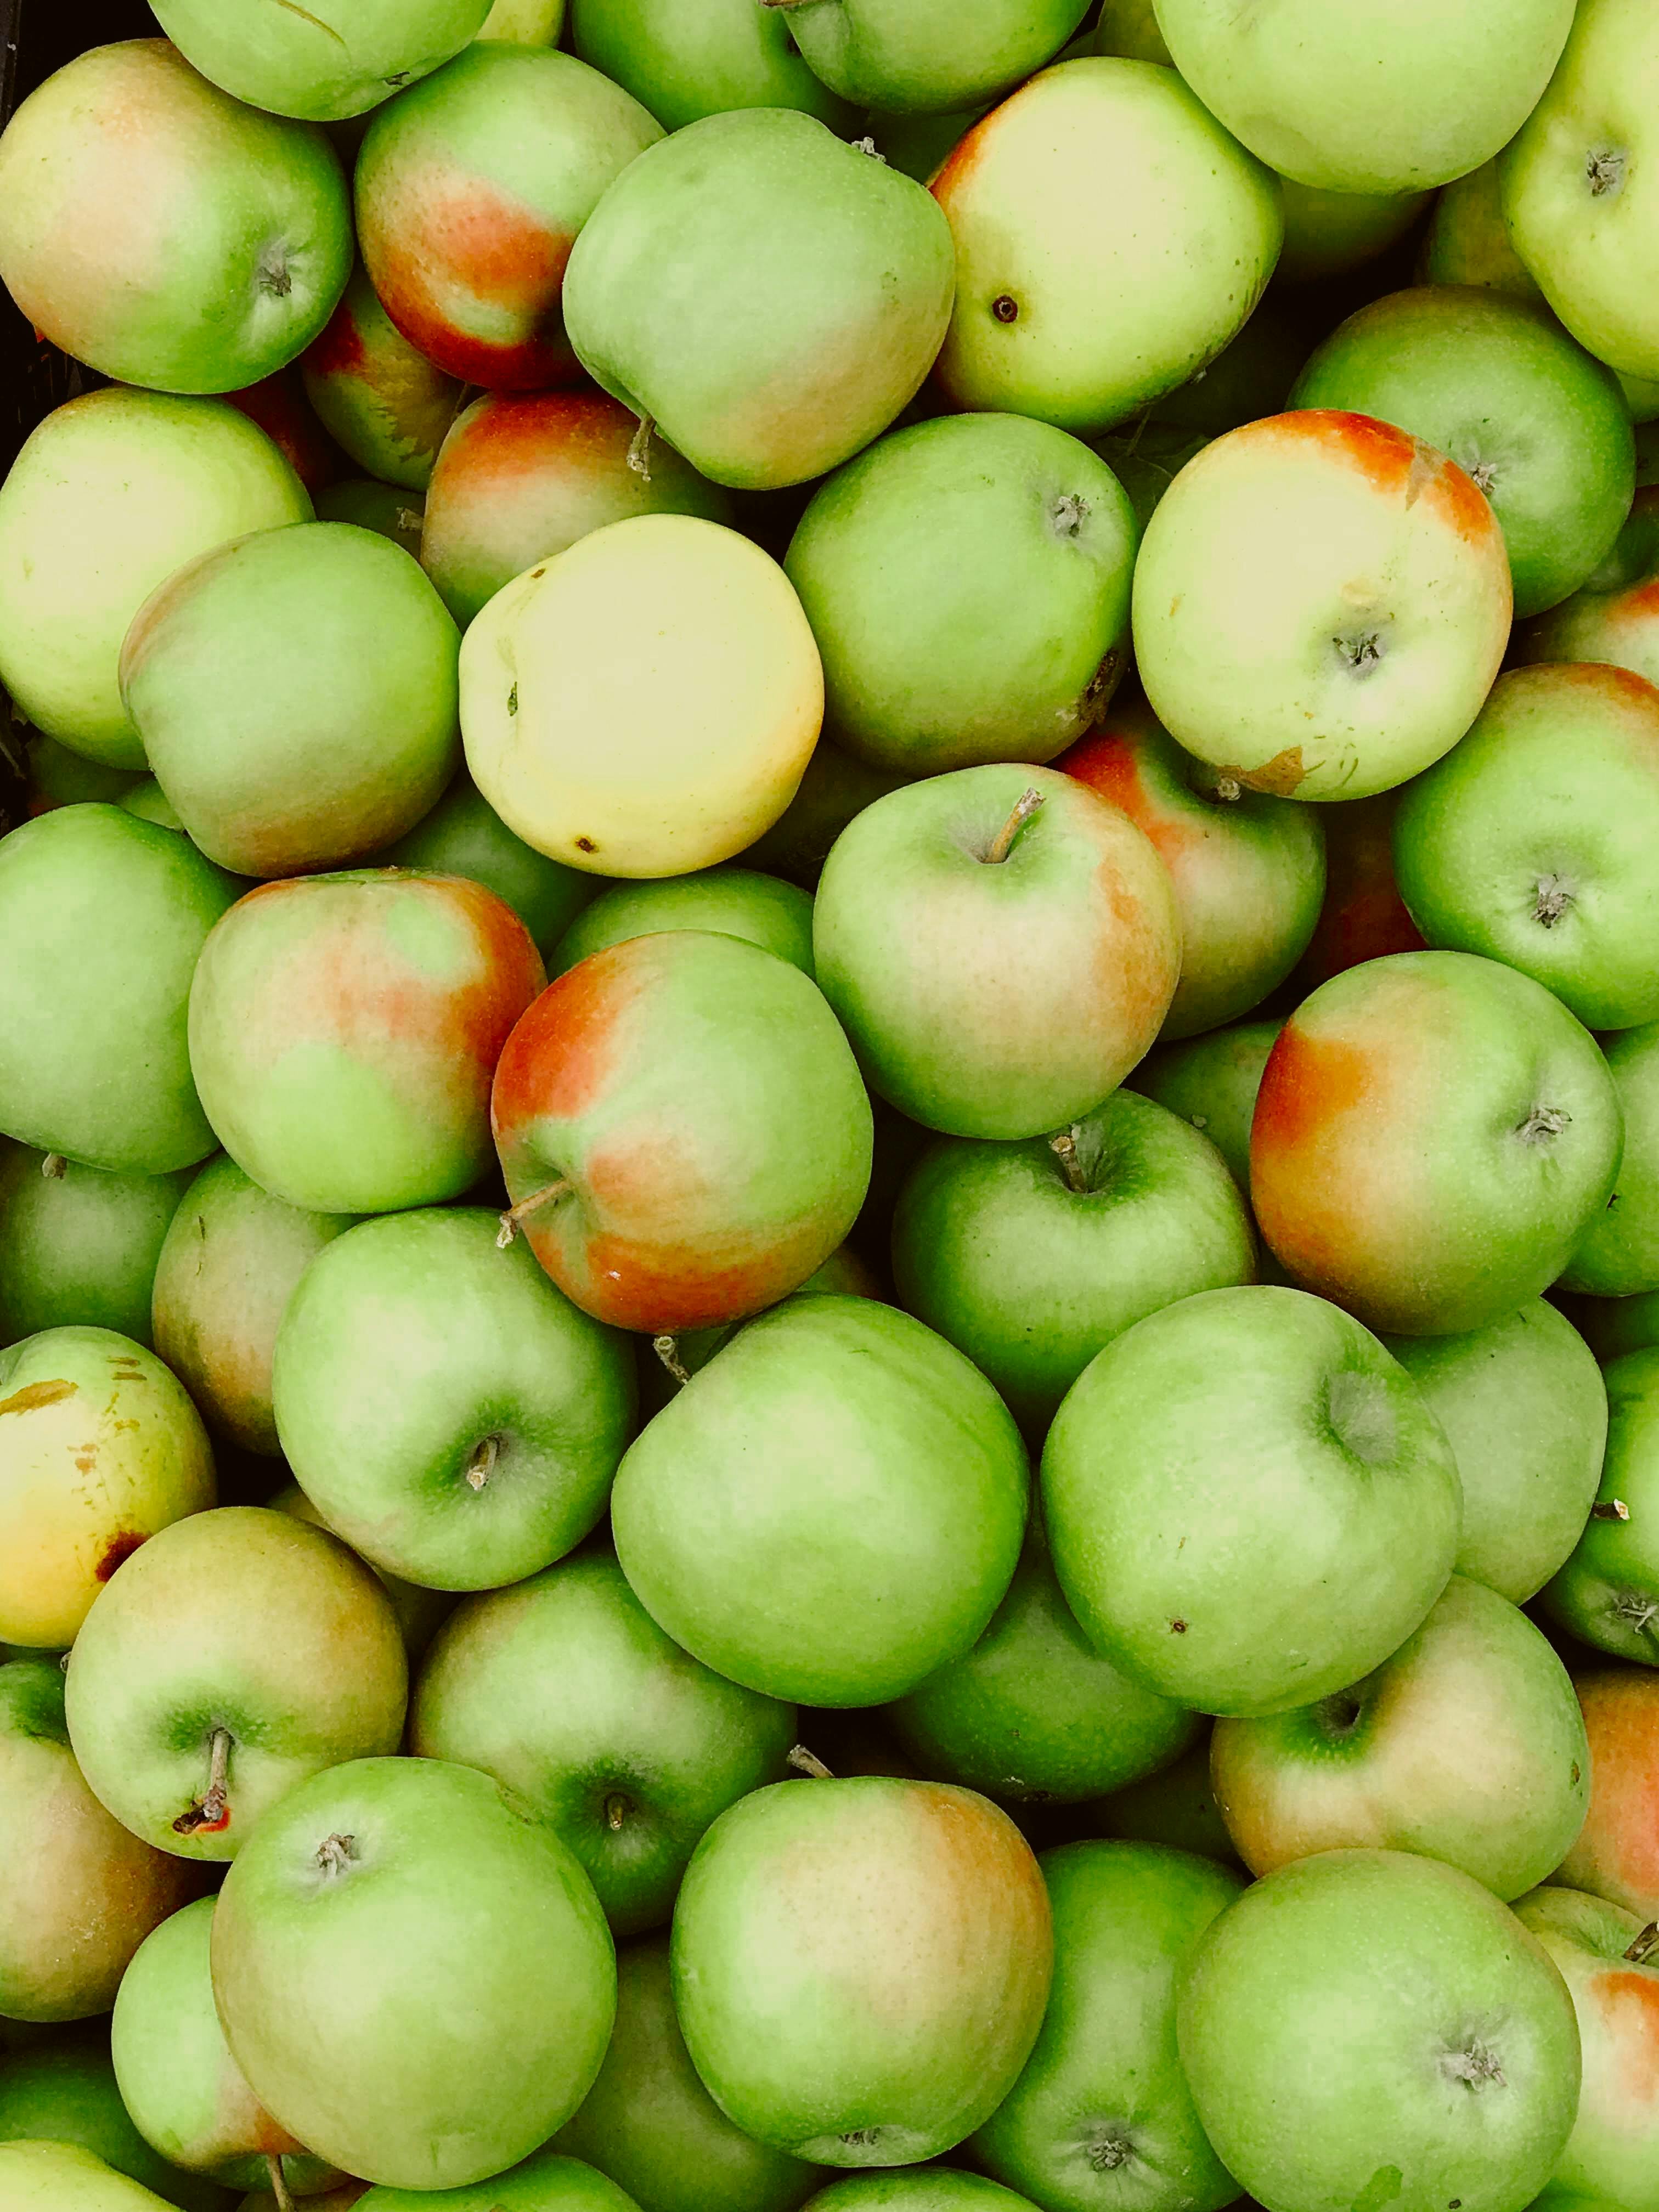 Five crisp healthy green apples - Free Stock Image